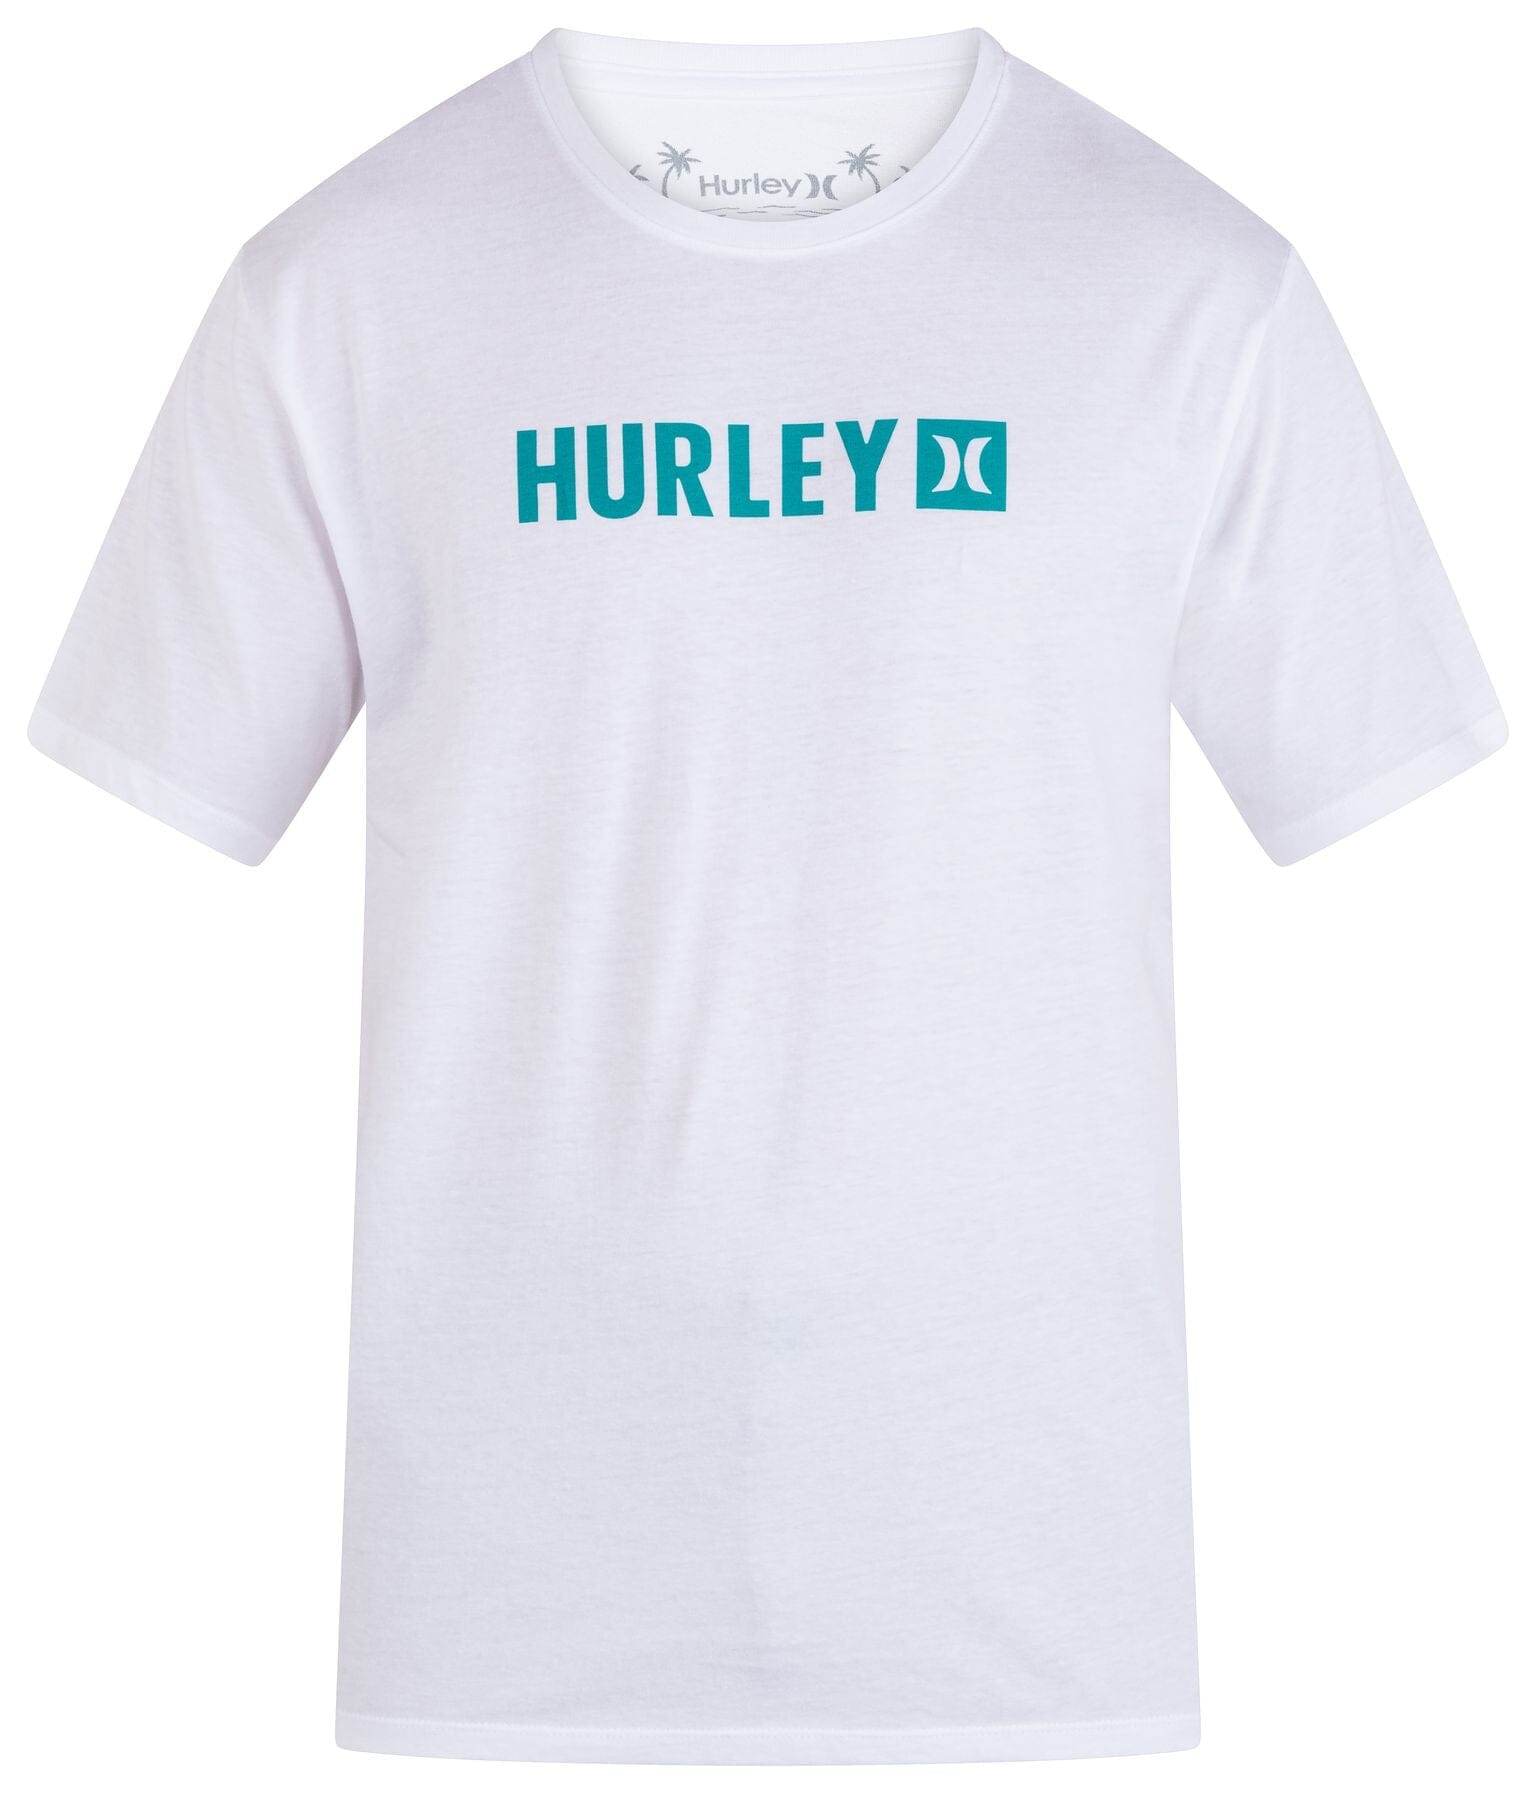 HURLEY Everyday The Box T-Shirt White - Freeride Boardshop